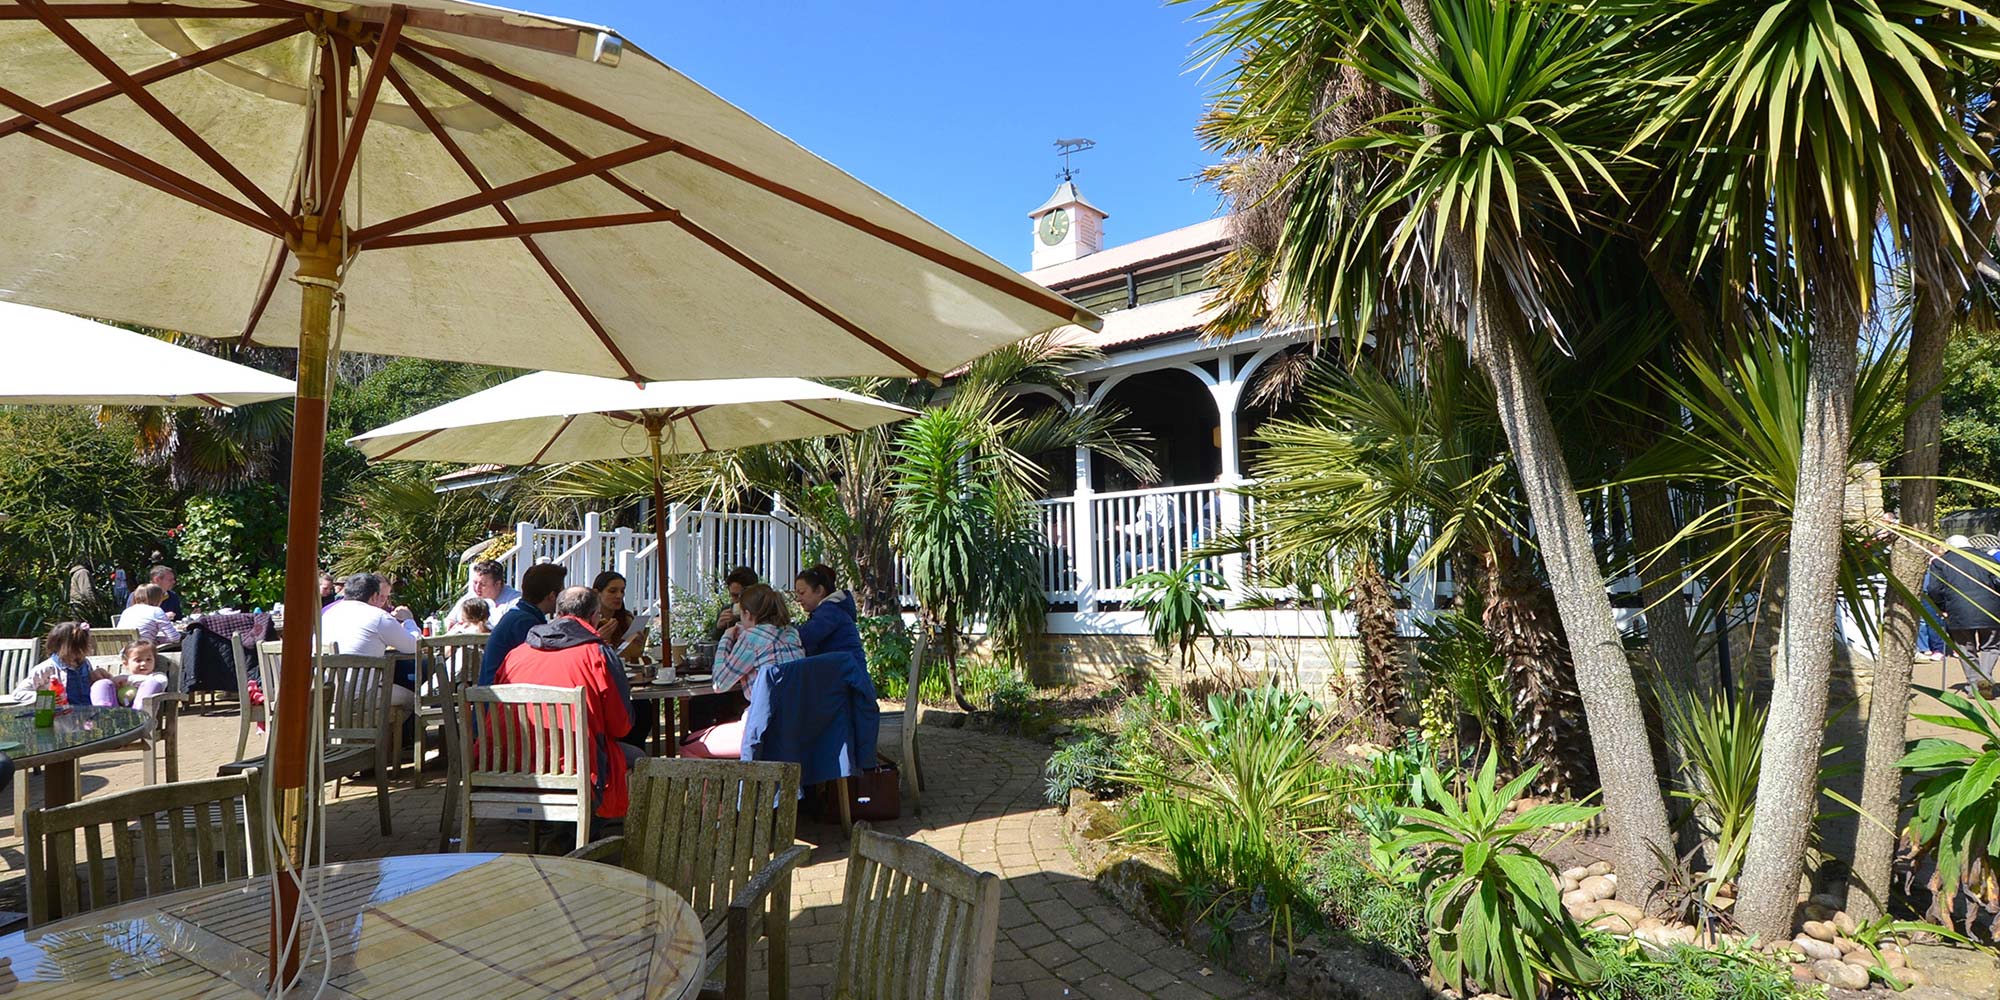 The Colonial Restaurant at Abbotsbury Subtropical Gardens